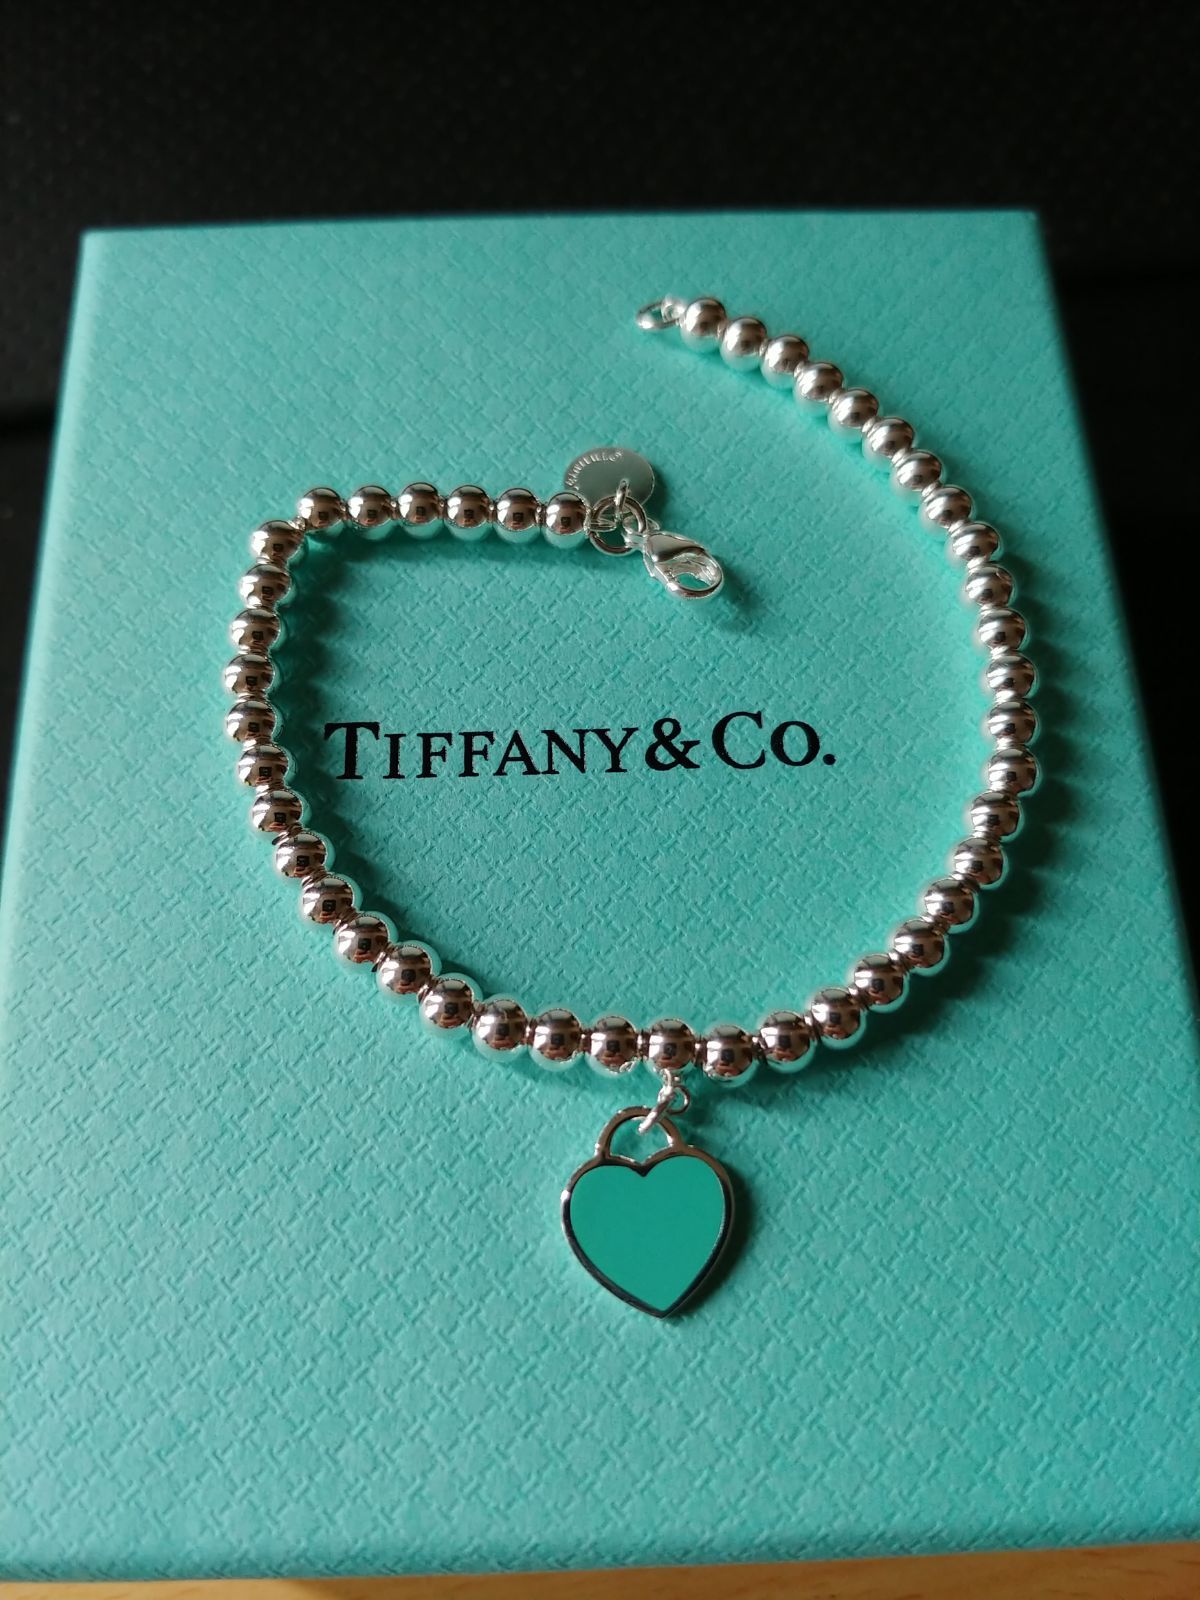 Tiffany and Co Bracelet on Mercari